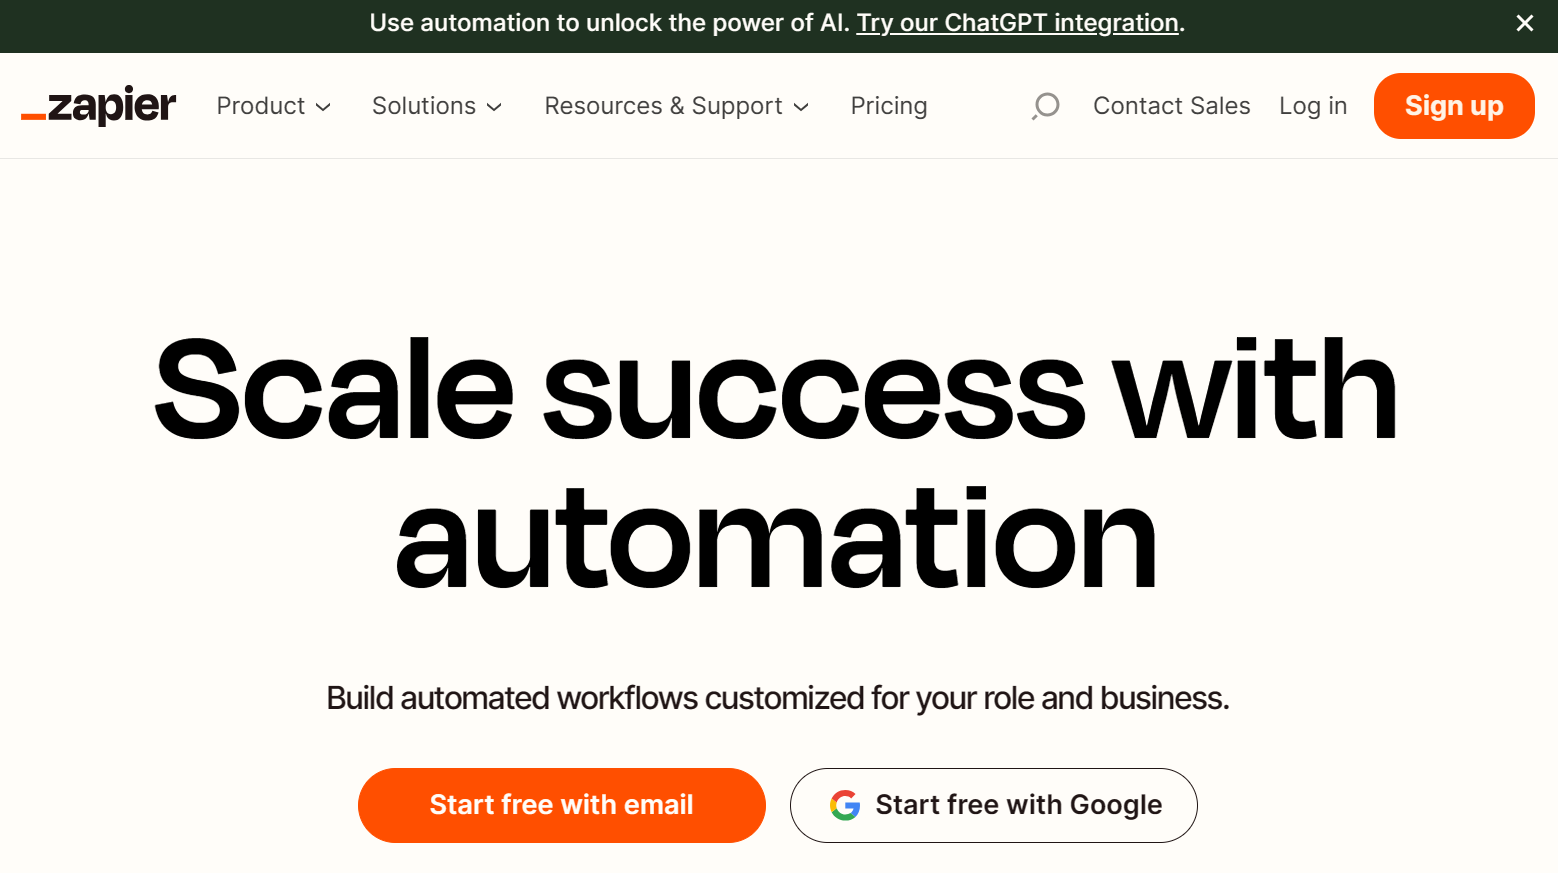 zapier.com – scale success with automation